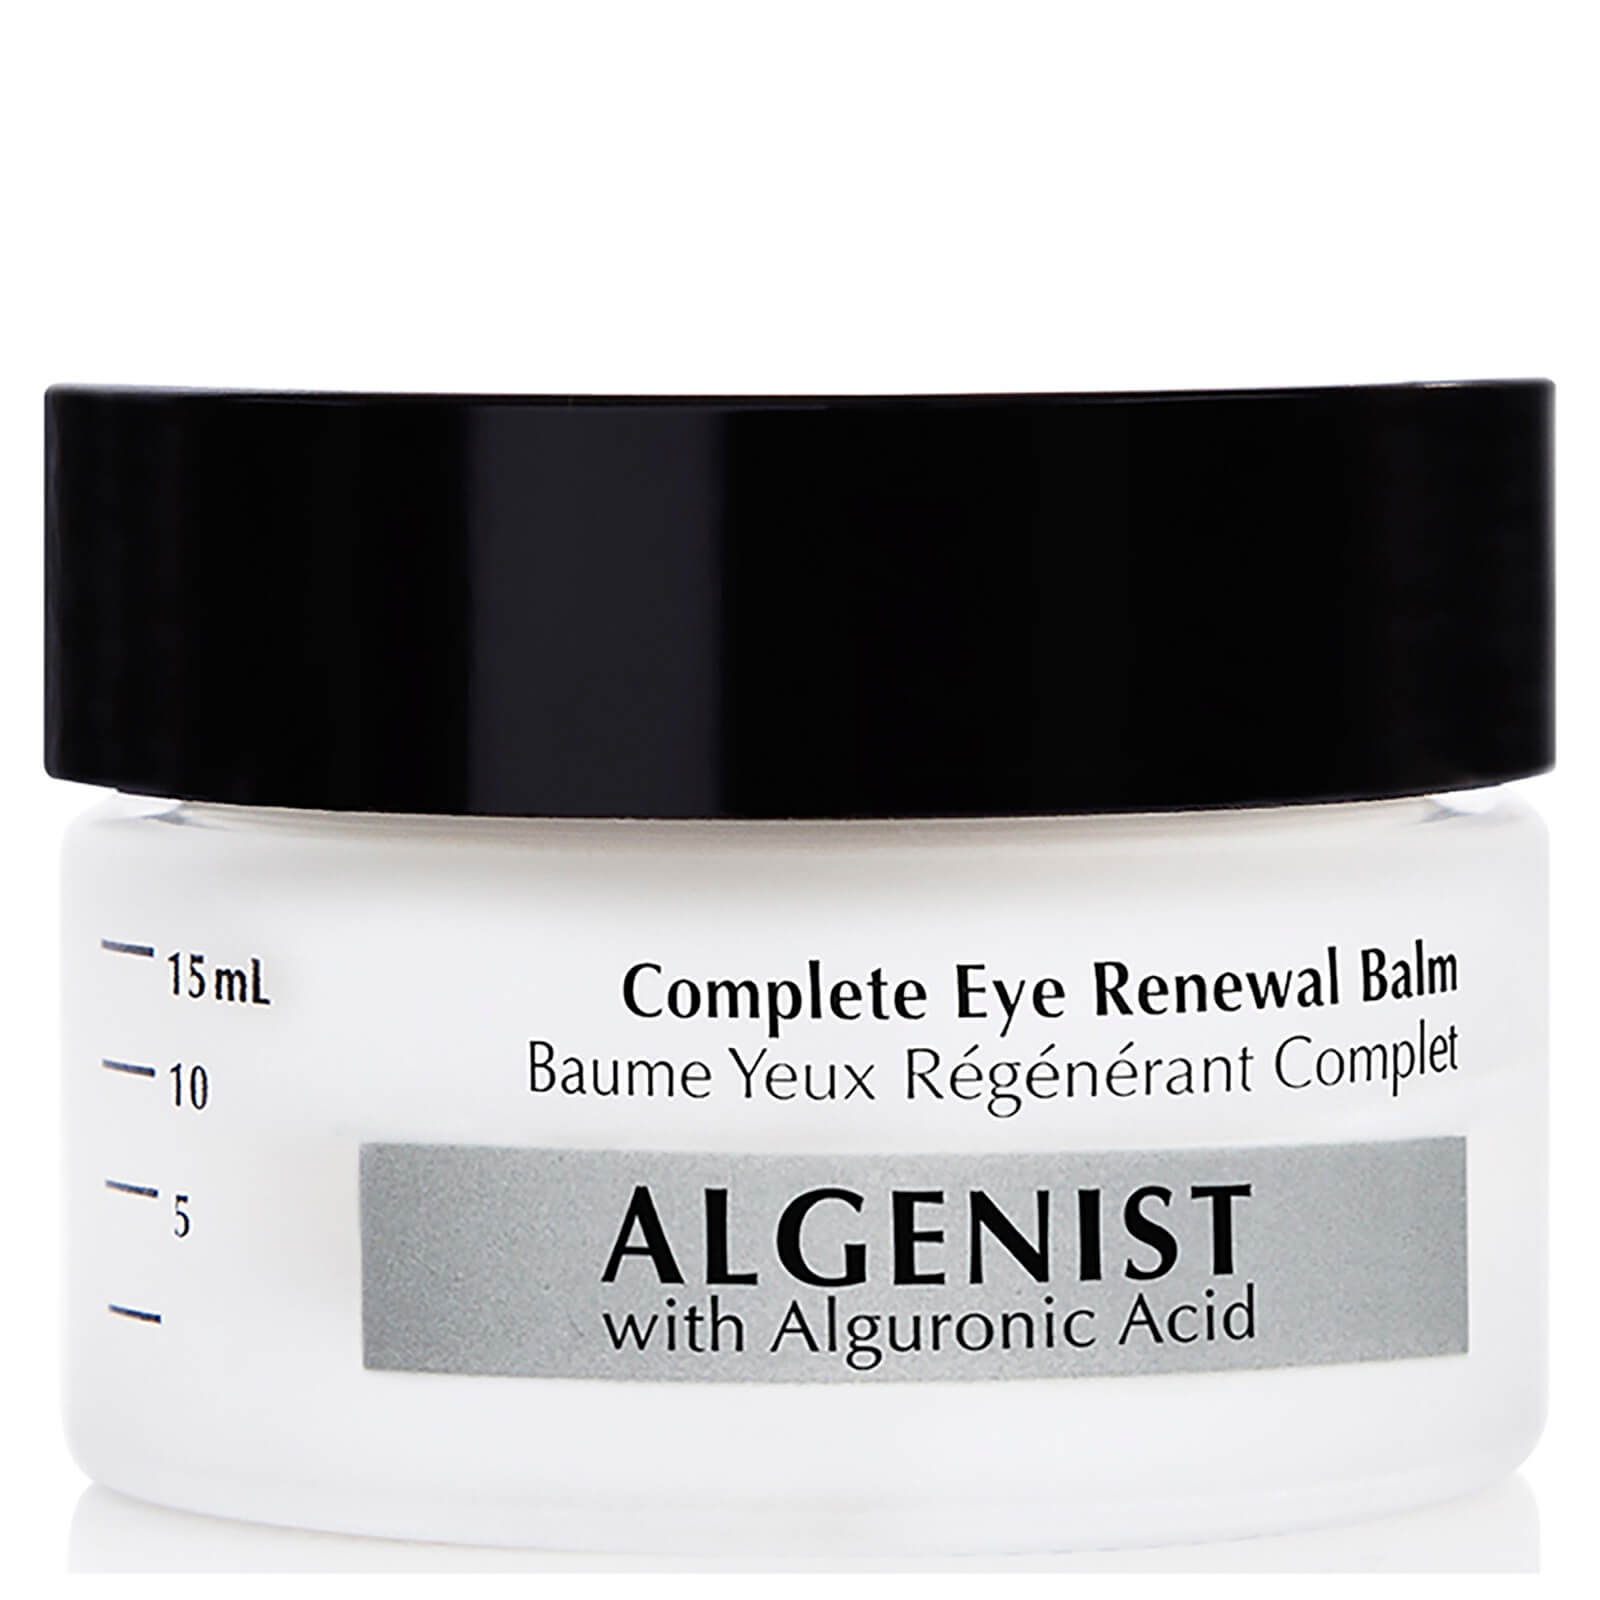 ALGENIST Complete Eye Renewal Balm 15ml